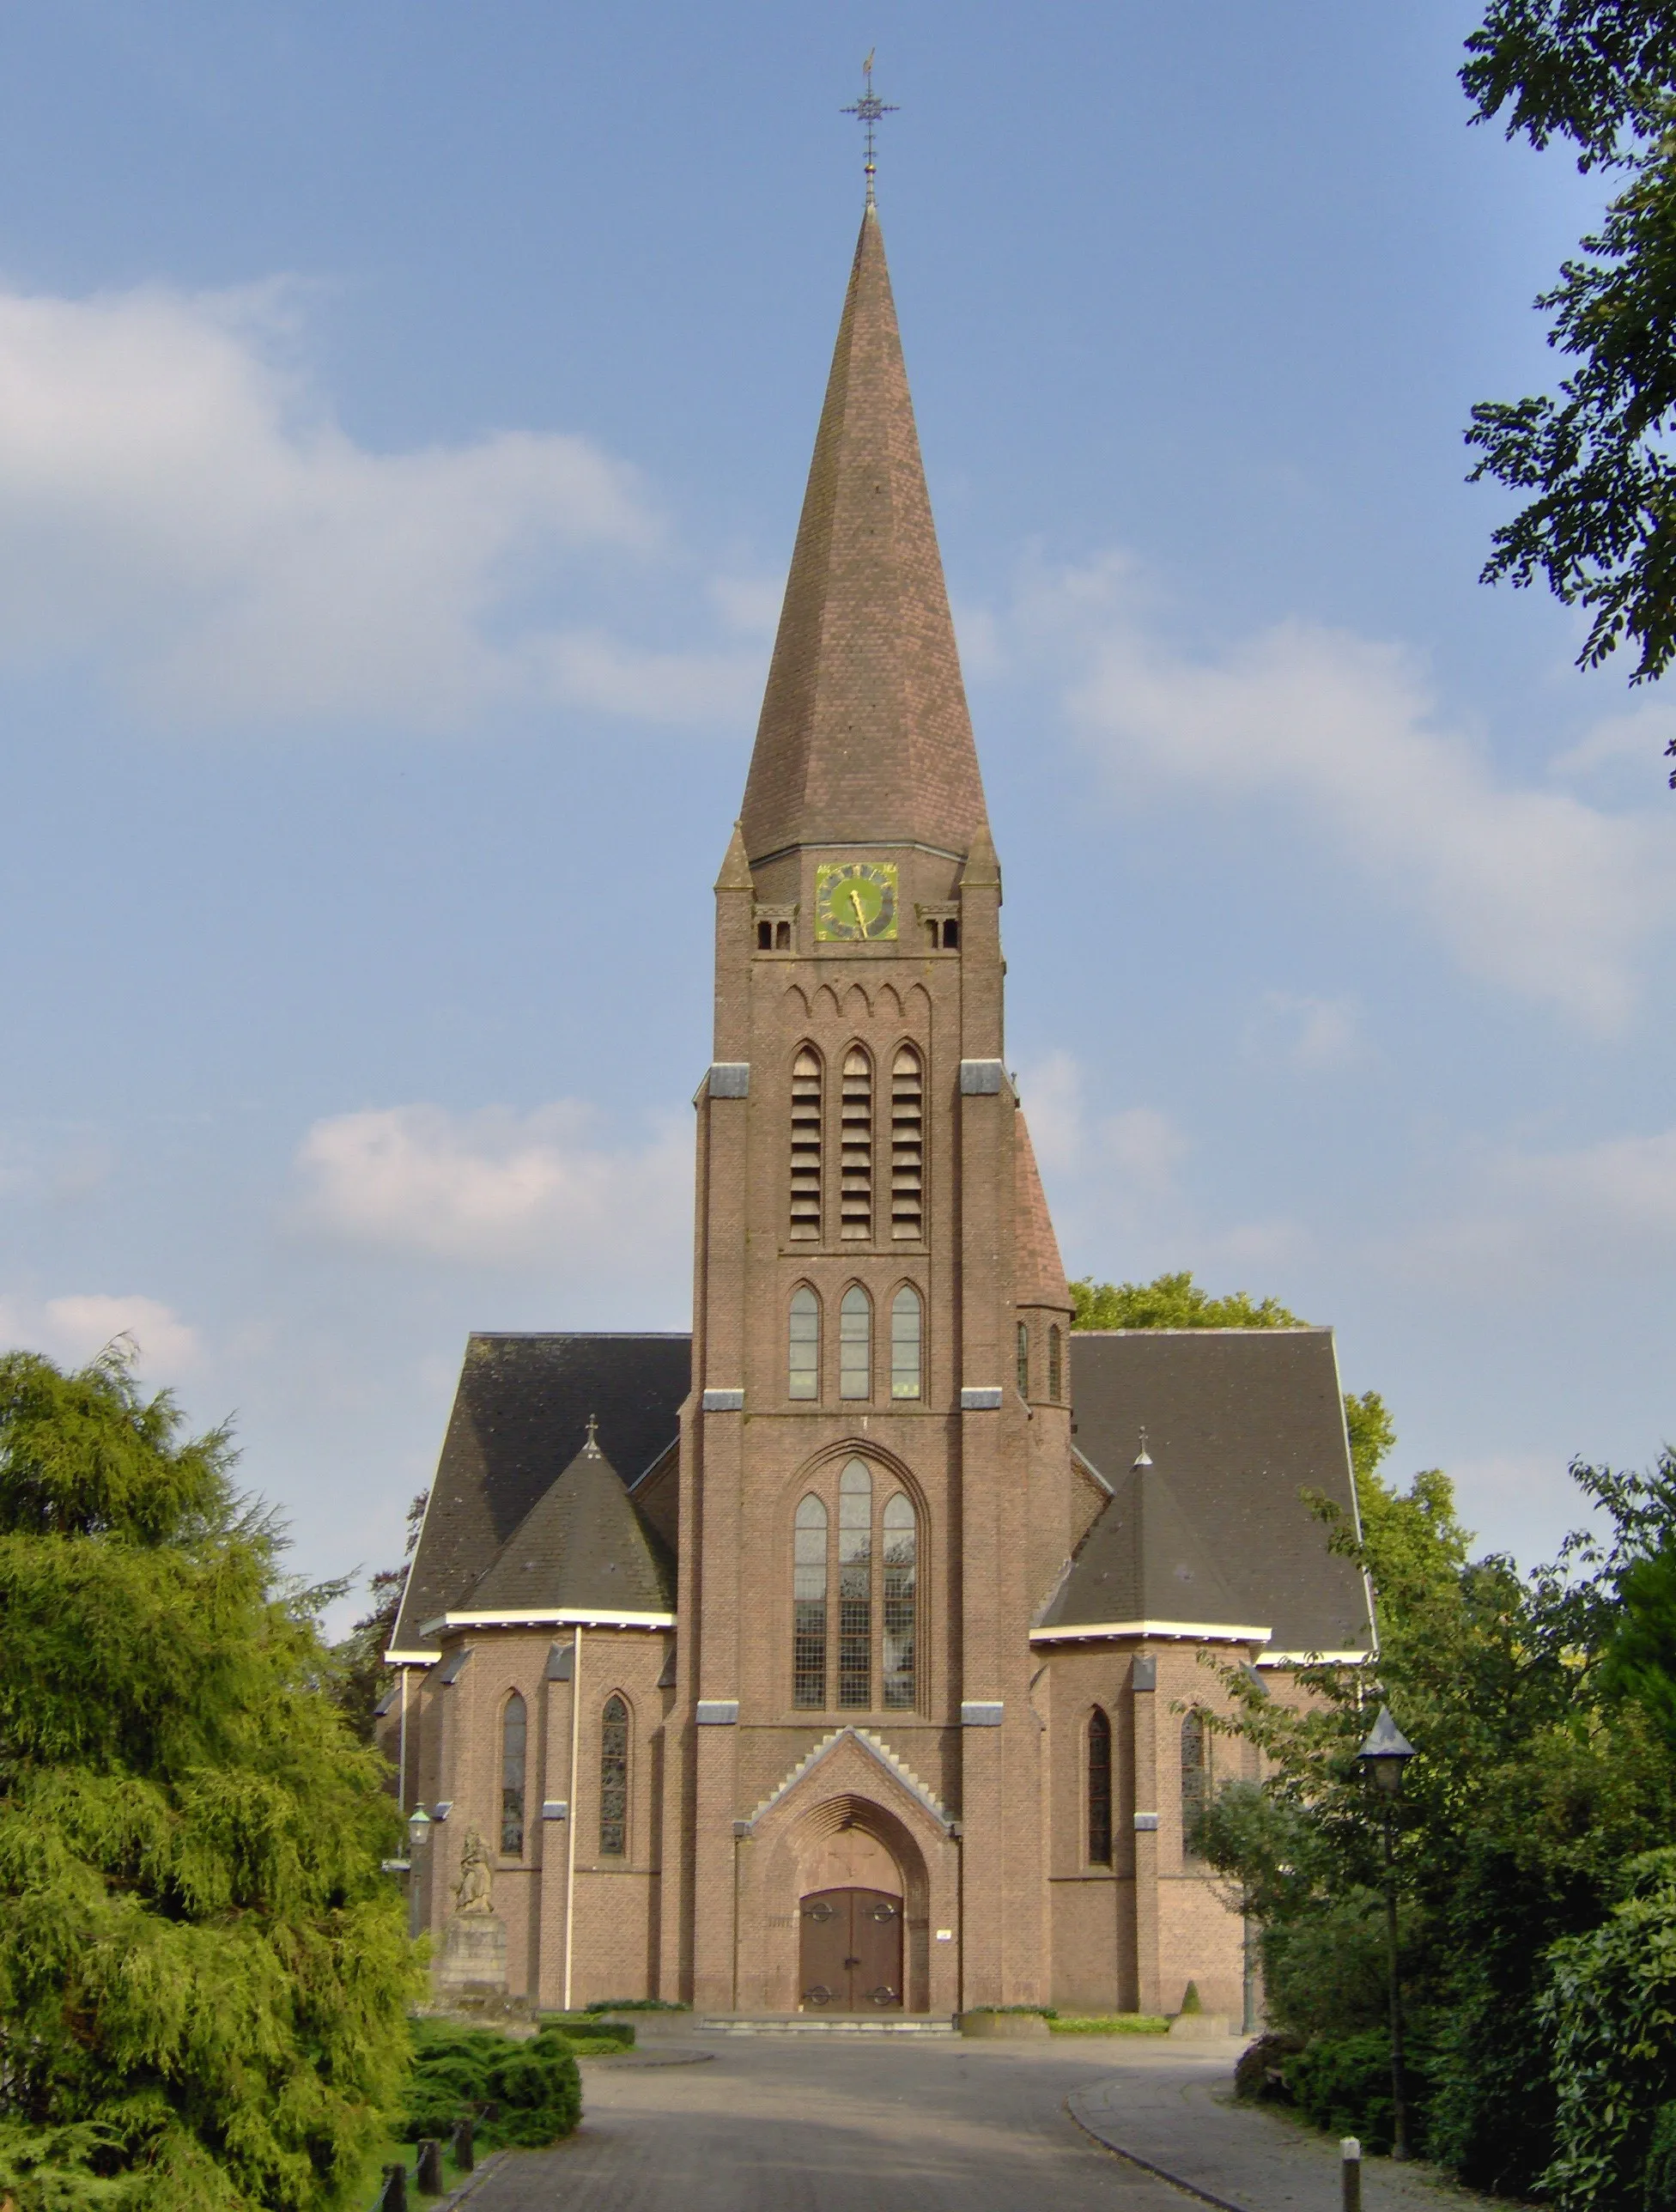 Photo showing: The Heilige Plechelmuskerk in Saasveld

Location: Saasveld, a village in the municipality of Dinkelland, Netherlands